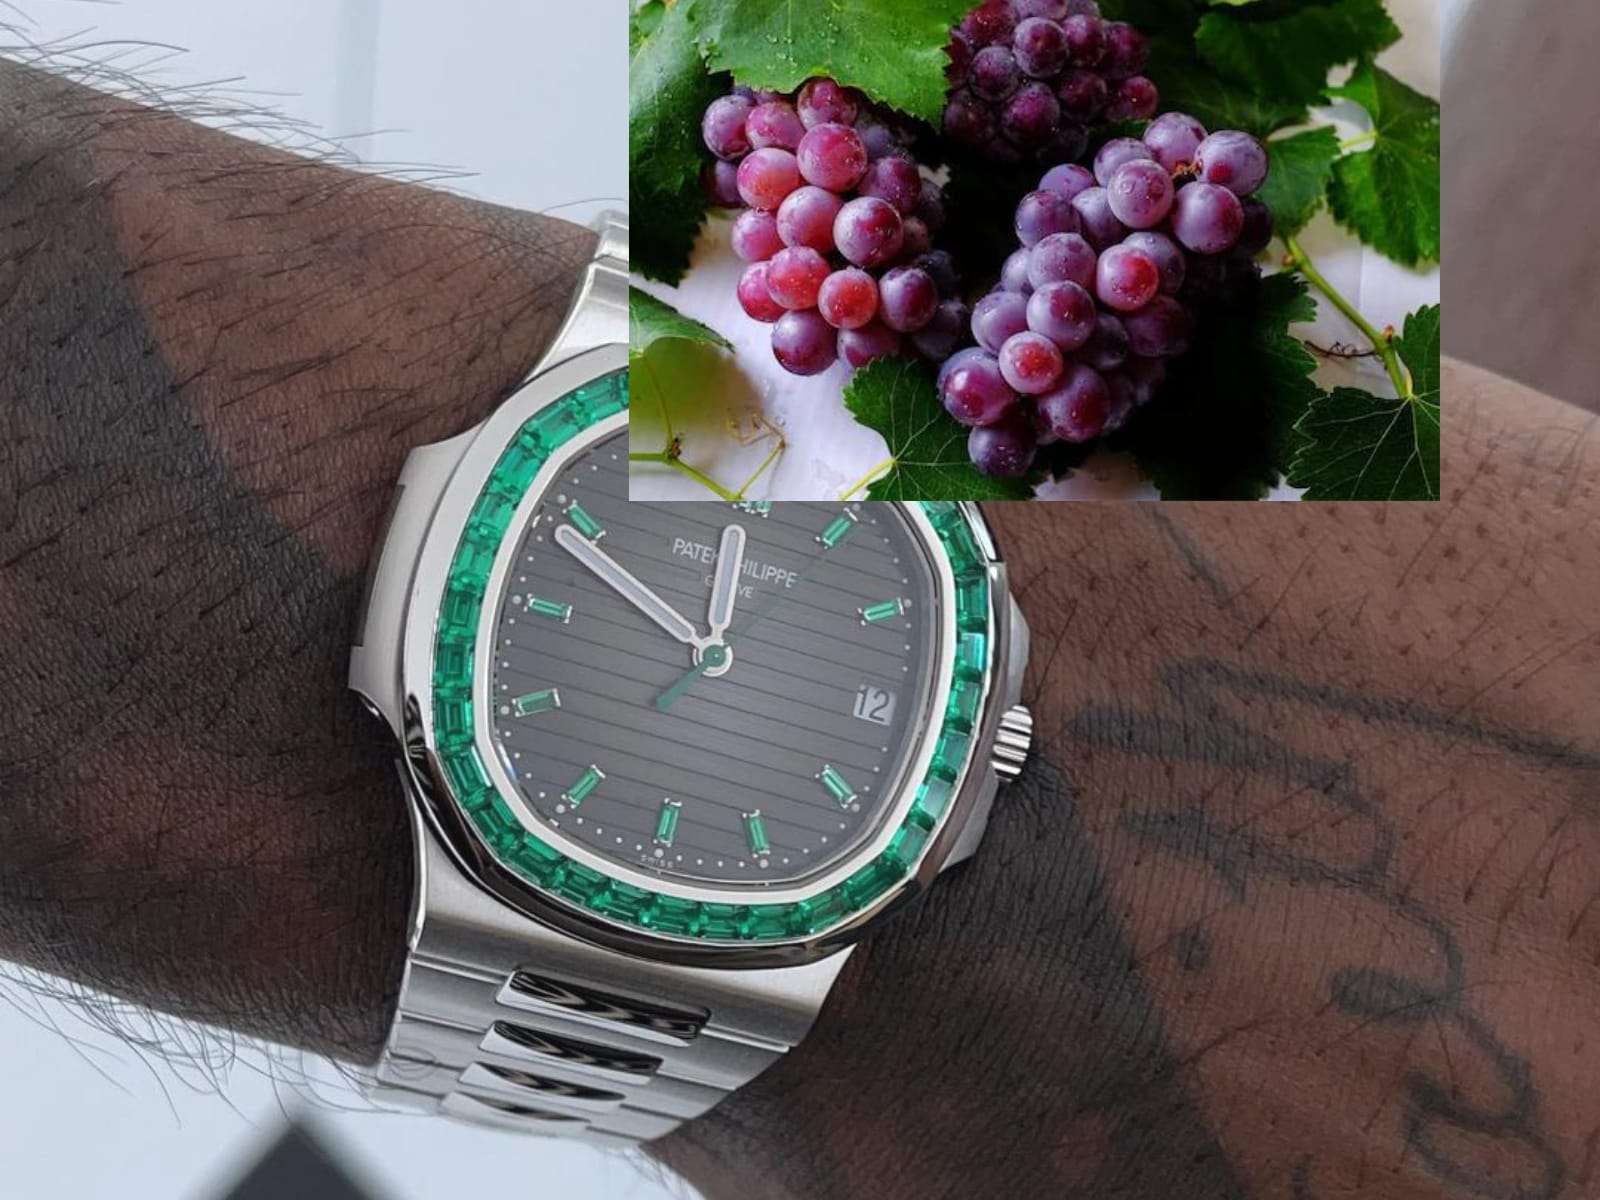 Hardik Pandya's newest watch, a Patek Philippe Nautilus Platinum